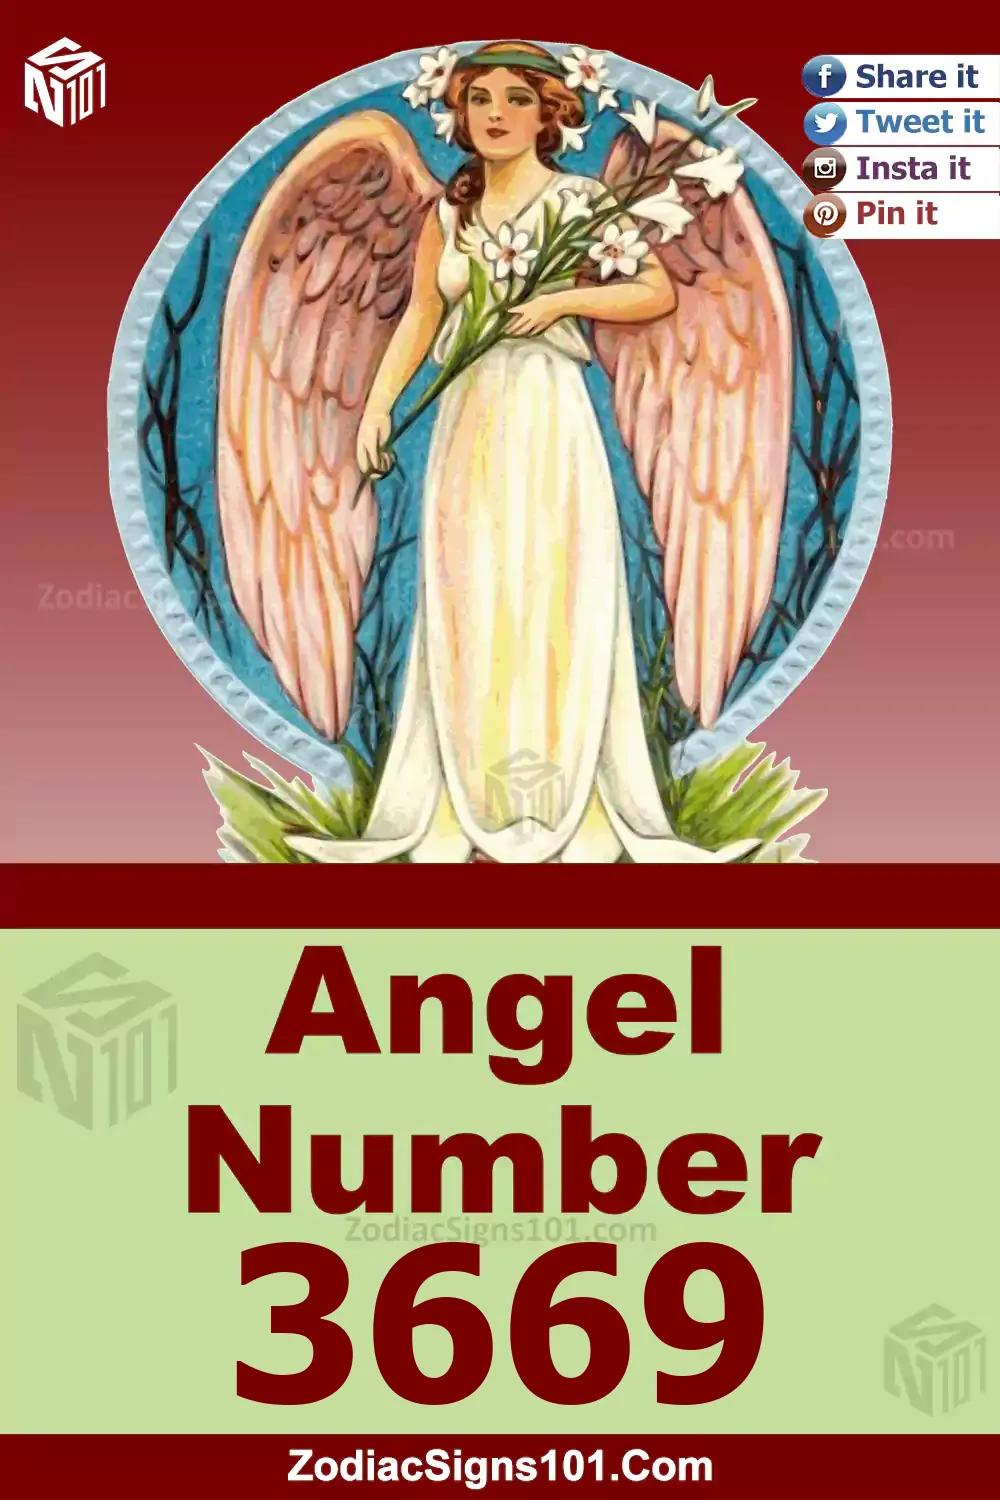 3669-Angel-Number-Meaning.jpg